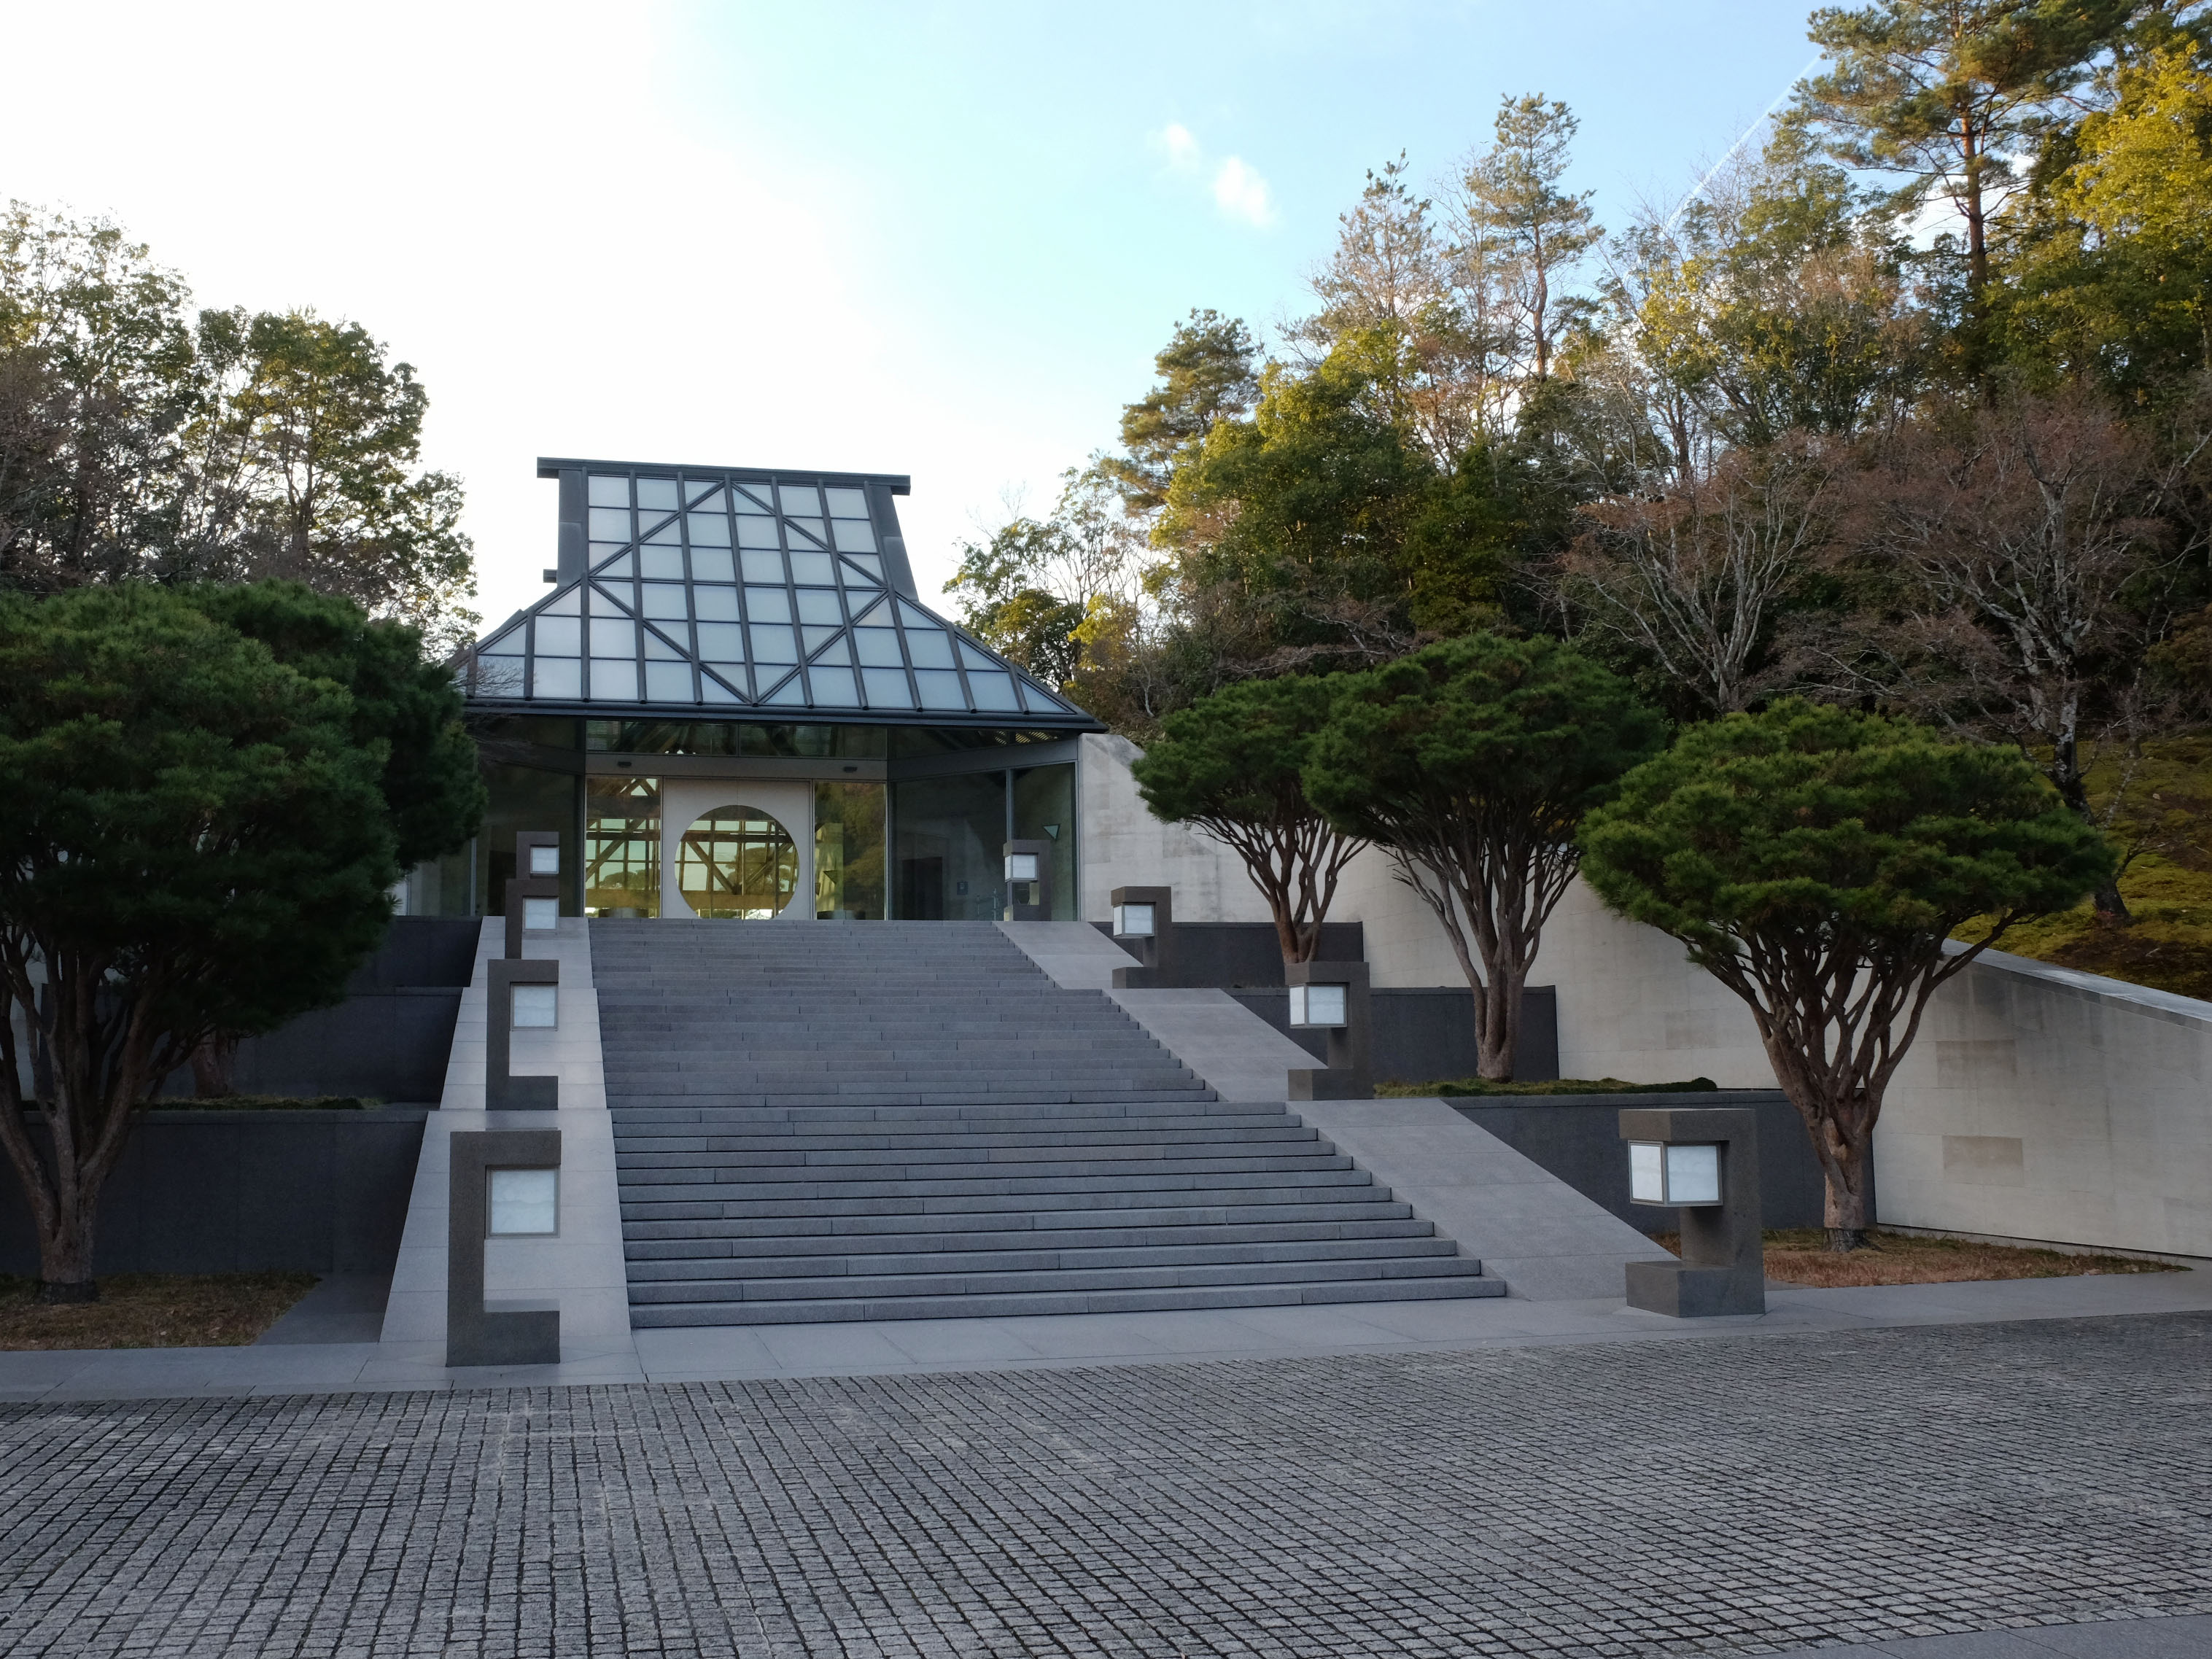 Visiting Miho Museum - Shiga - Japan Travel